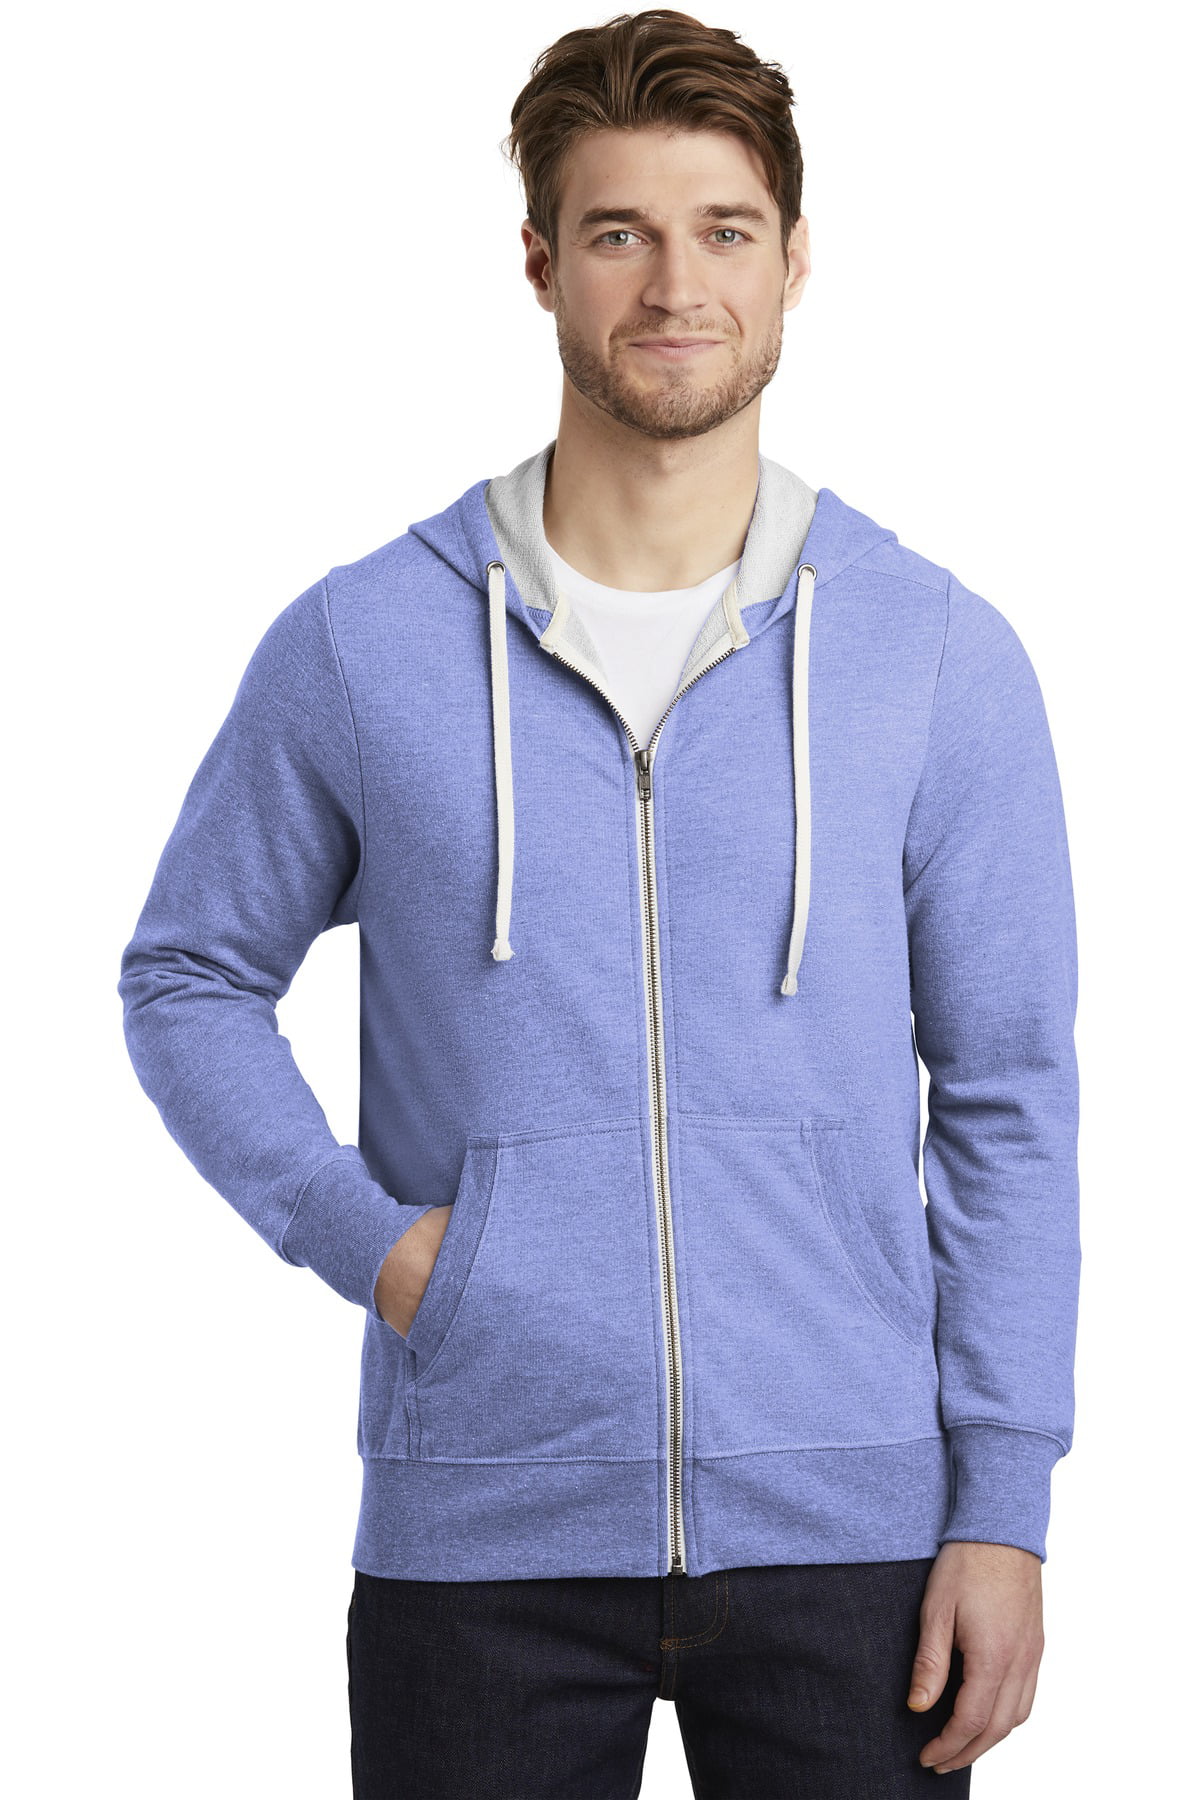 California Sun & Fun Premium Unisex French Terry Full-Zip Sweatshirt